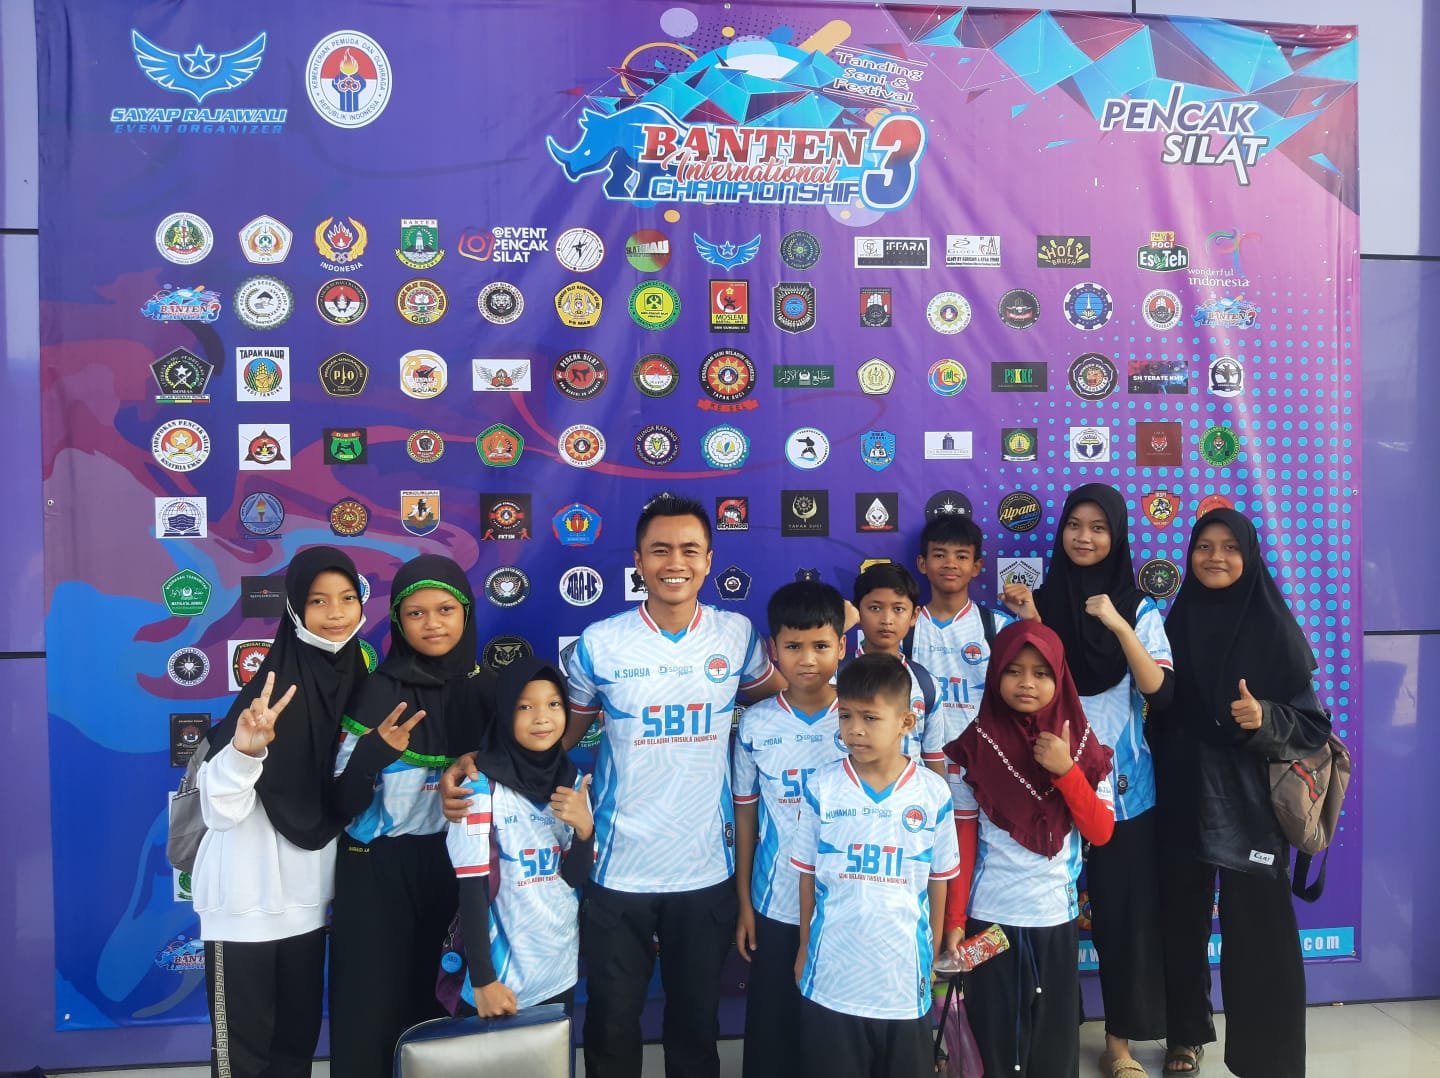 Perguruan Pencak Silat Seni Beladiri Trisula Indonesia Turut Serta Di Ajang Bergengsi Kejuaraan Banten Interna